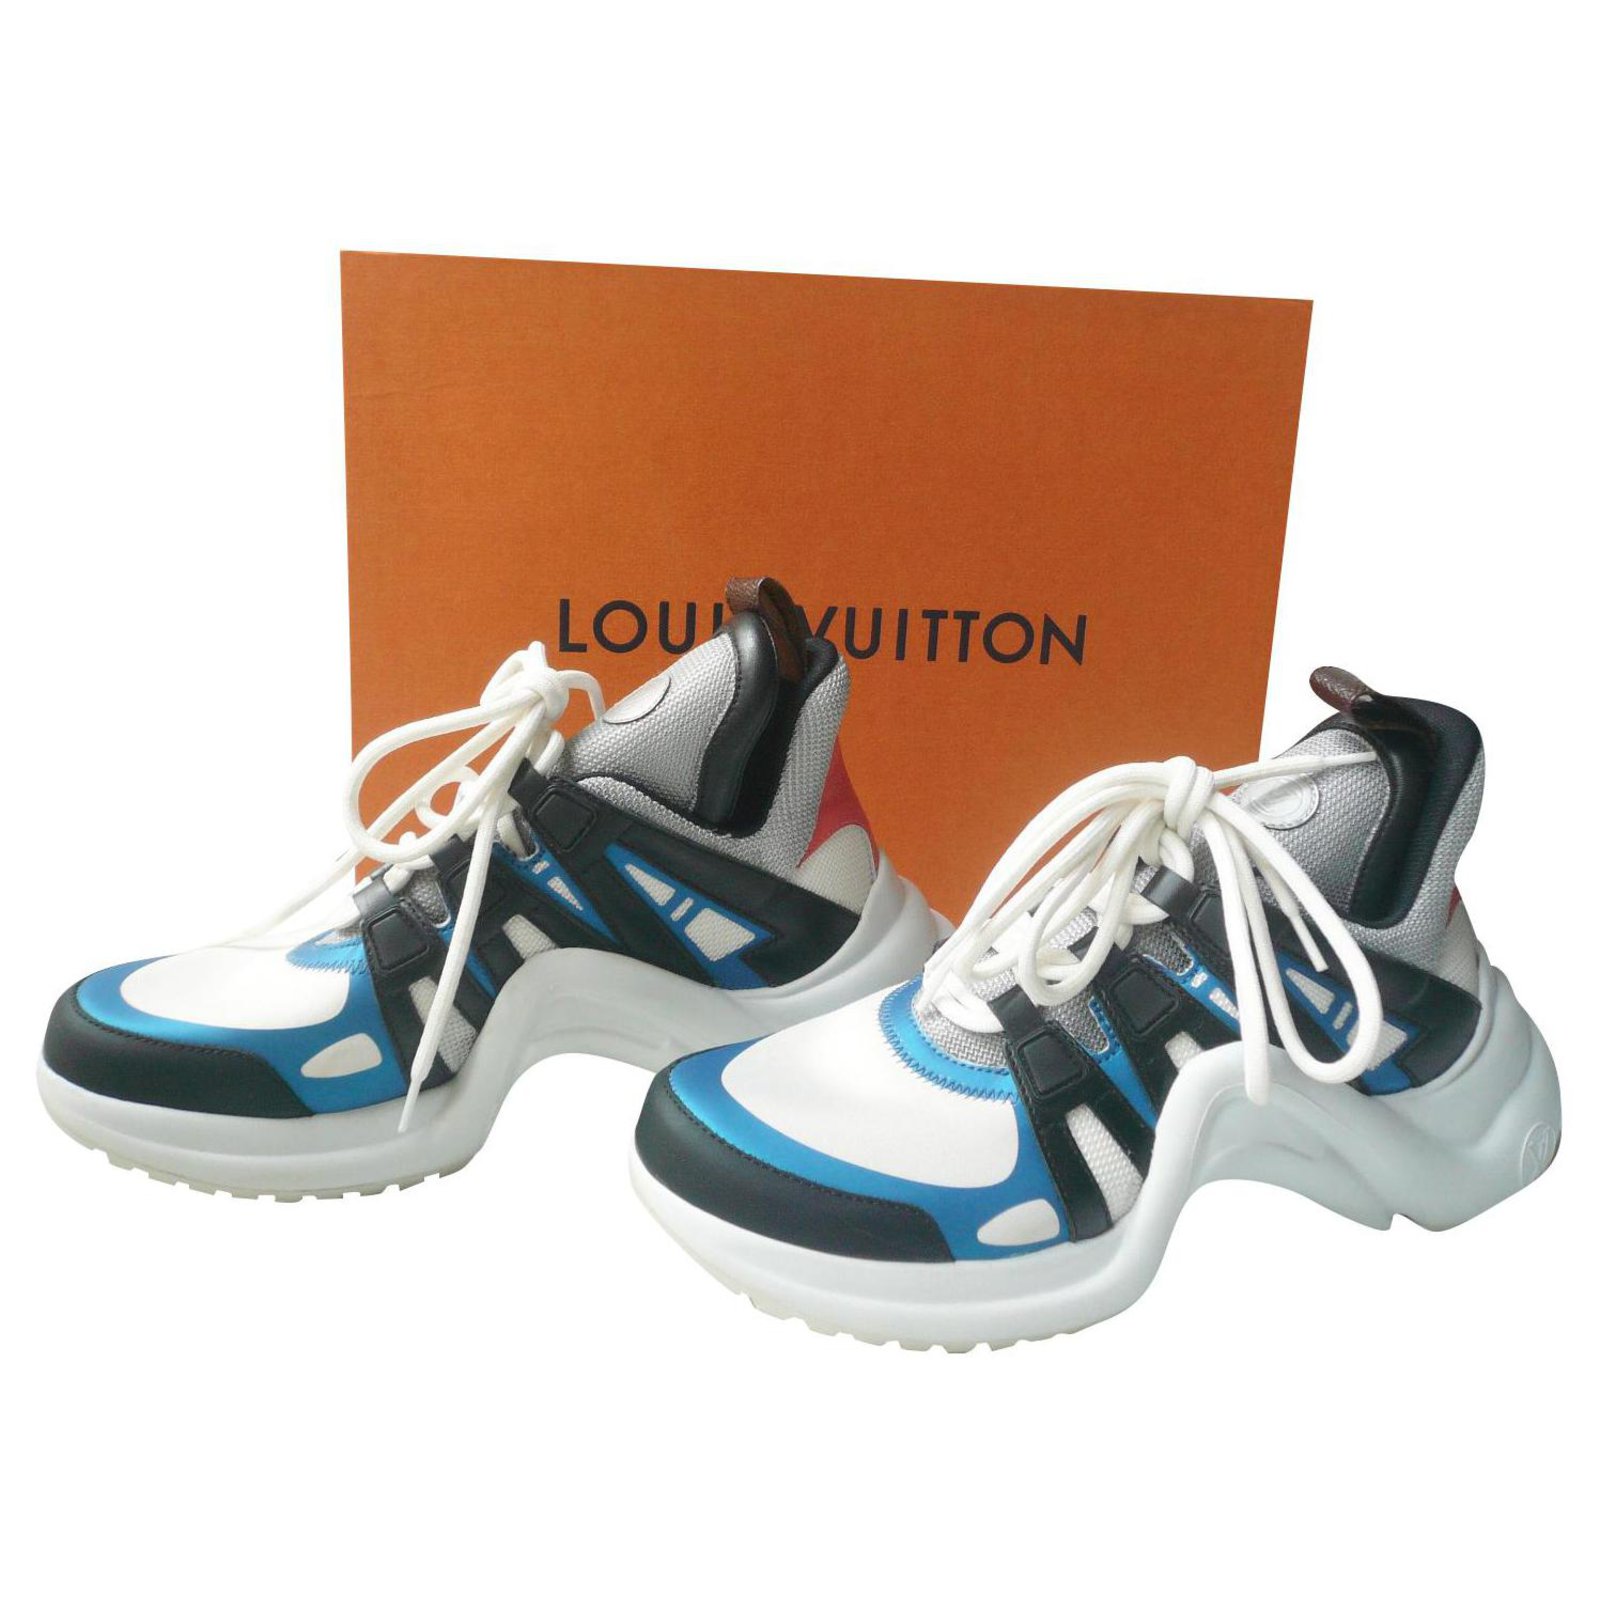 Louis Vuitton LV Archlight Are Must-Have Designer Kicks